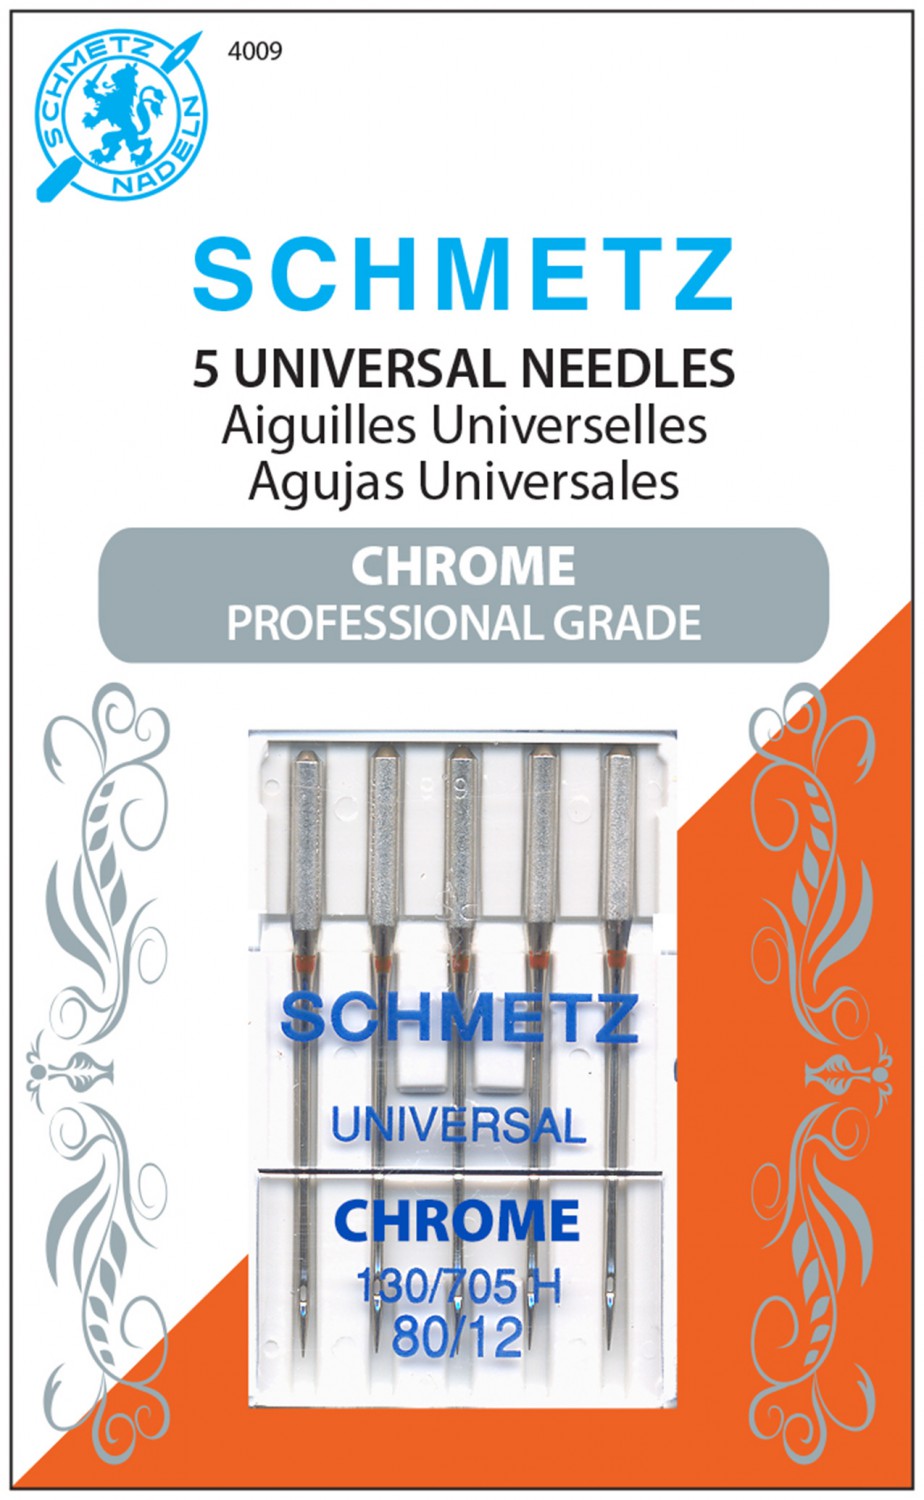 Schmetz - Chrome Professional Grade - Universal Needles Carded - 80/12 - 5 count